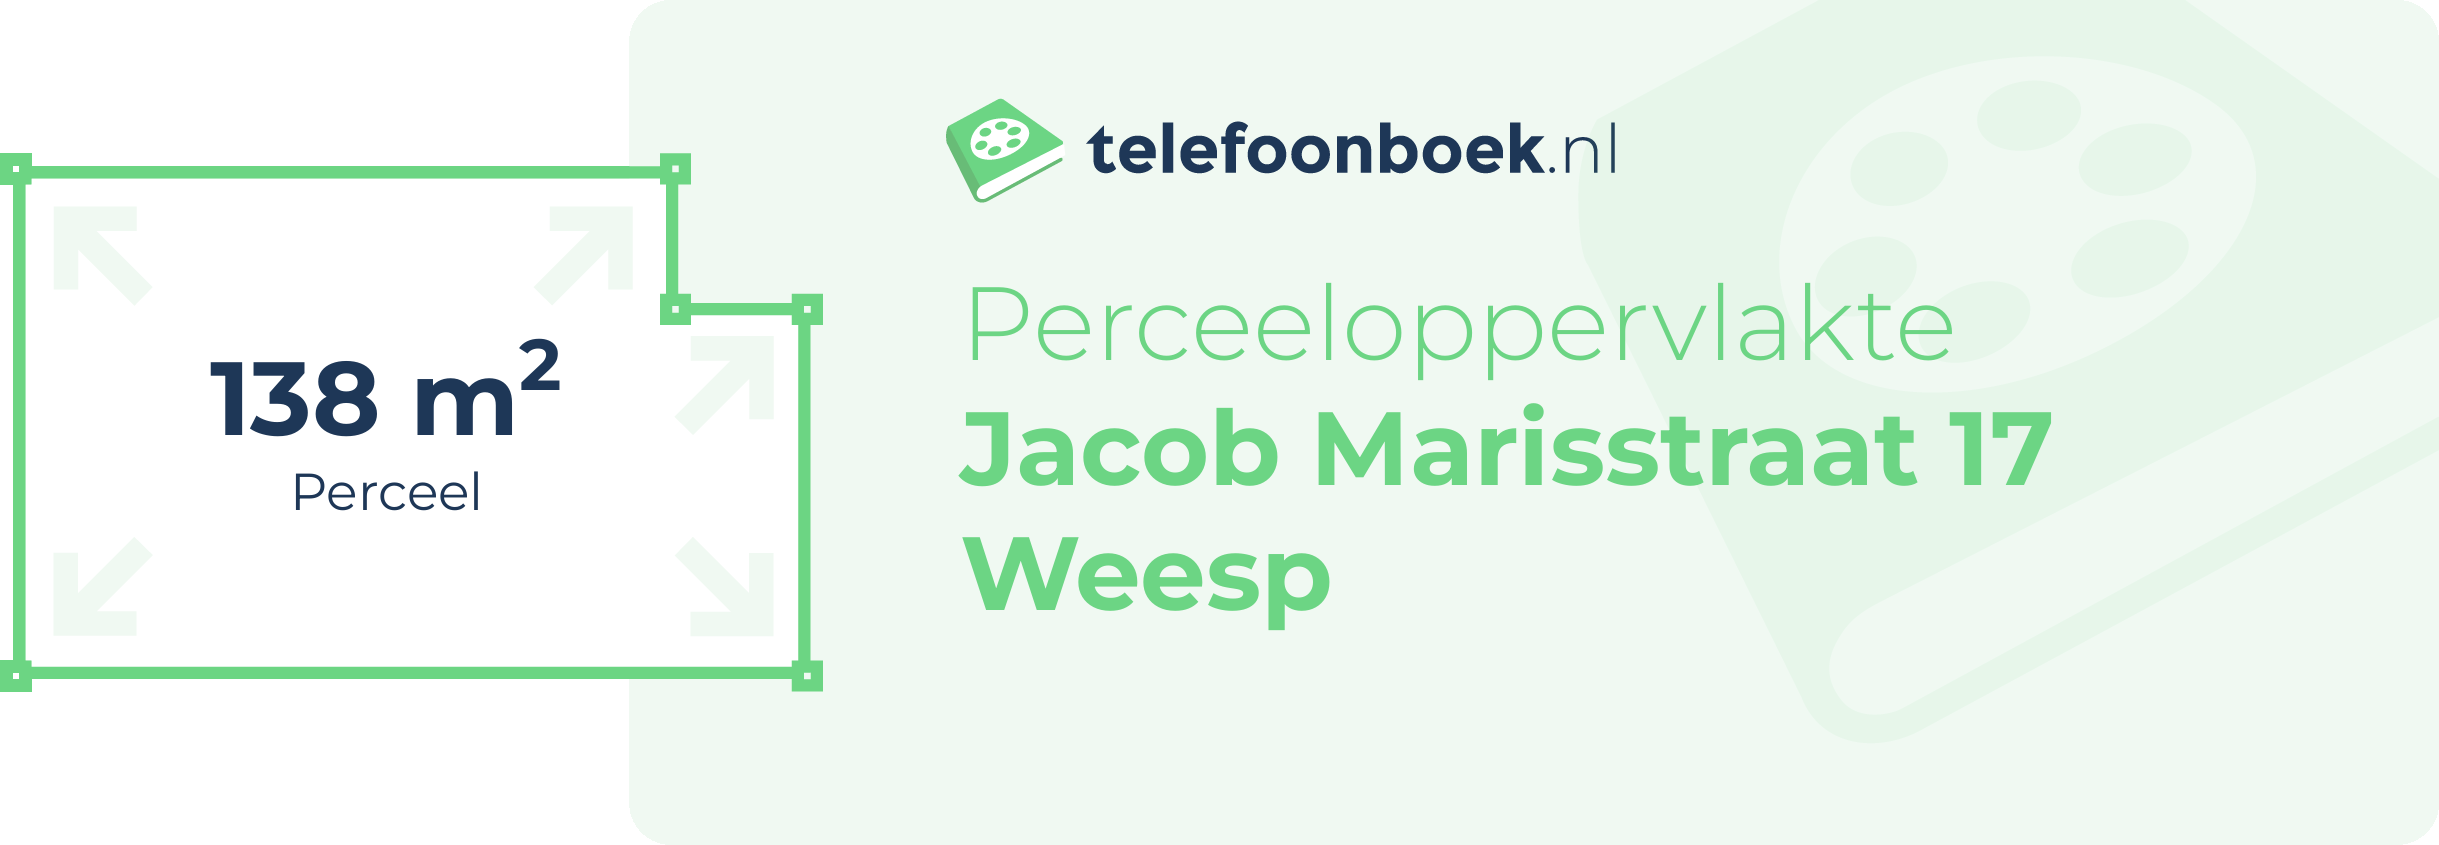 Perceeloppervlakte Jacob Marisstraat 17 Weesp